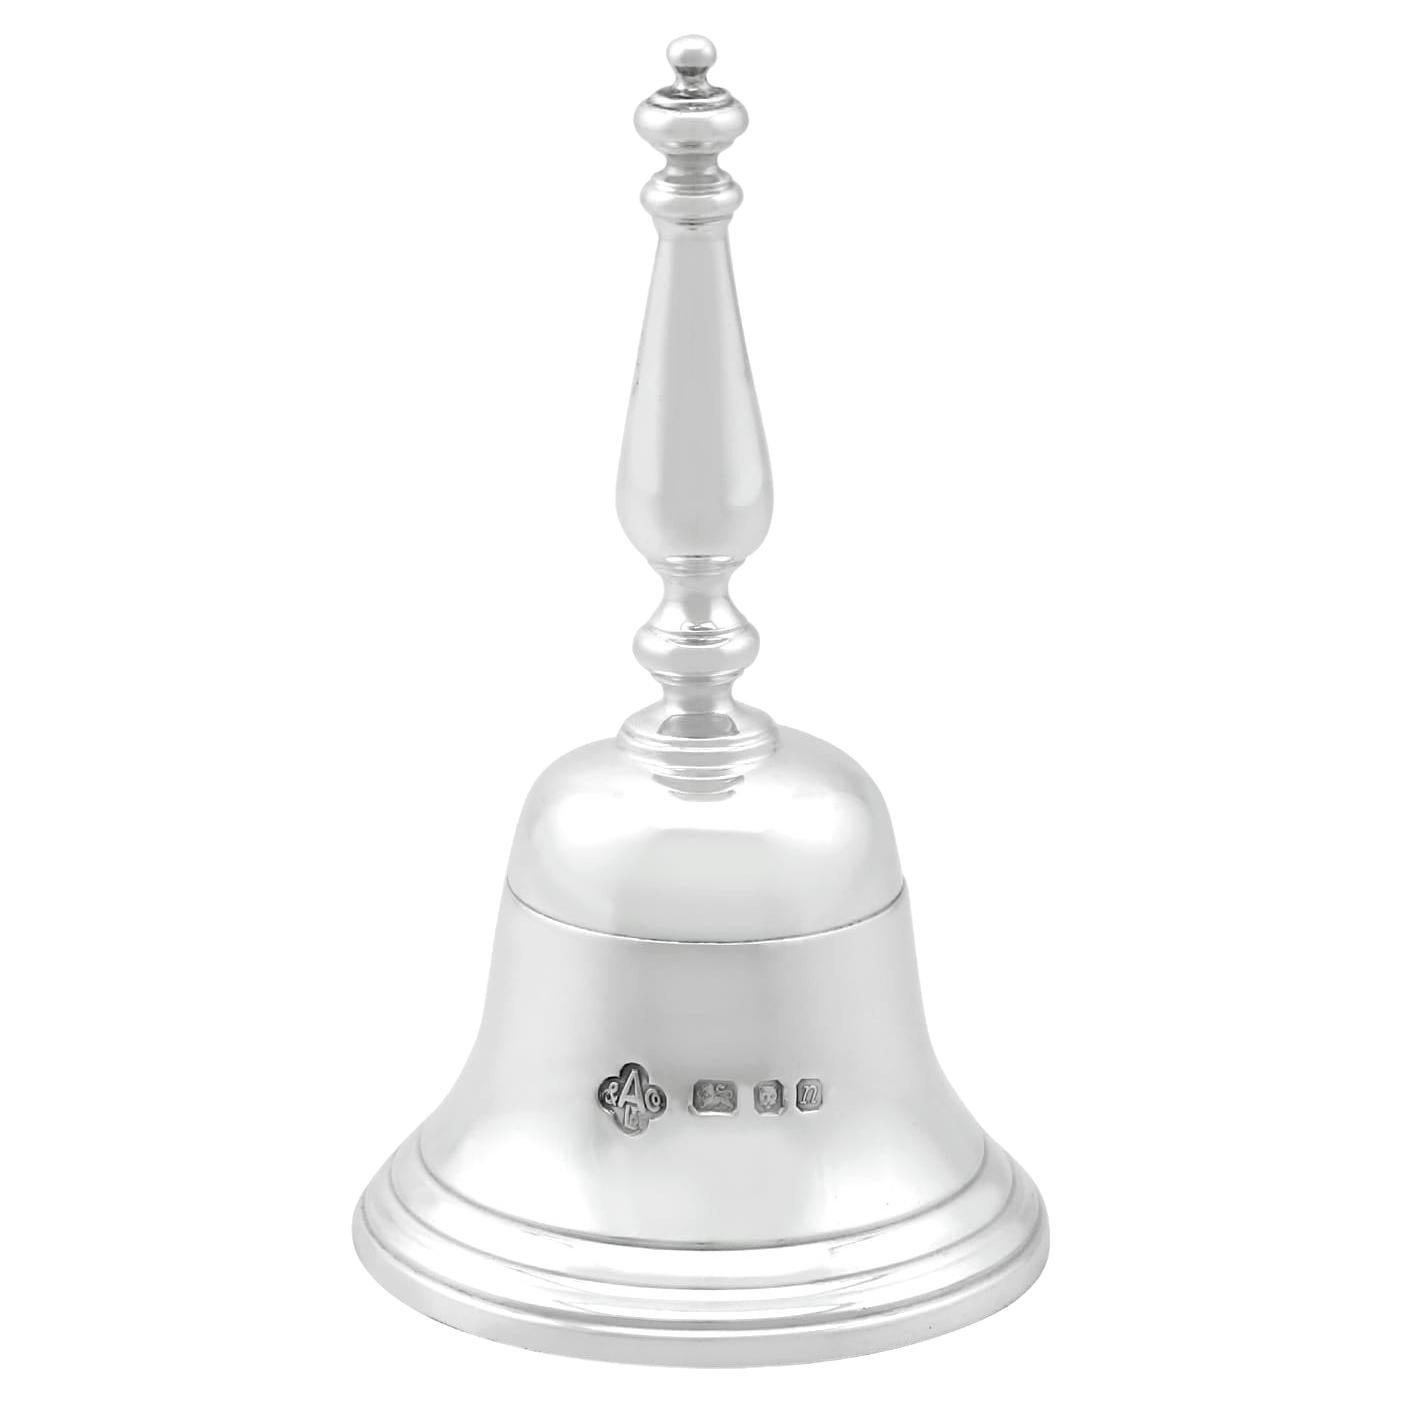 Vintage Sterling Silver Table Bell by Asprey & Co Ltd.